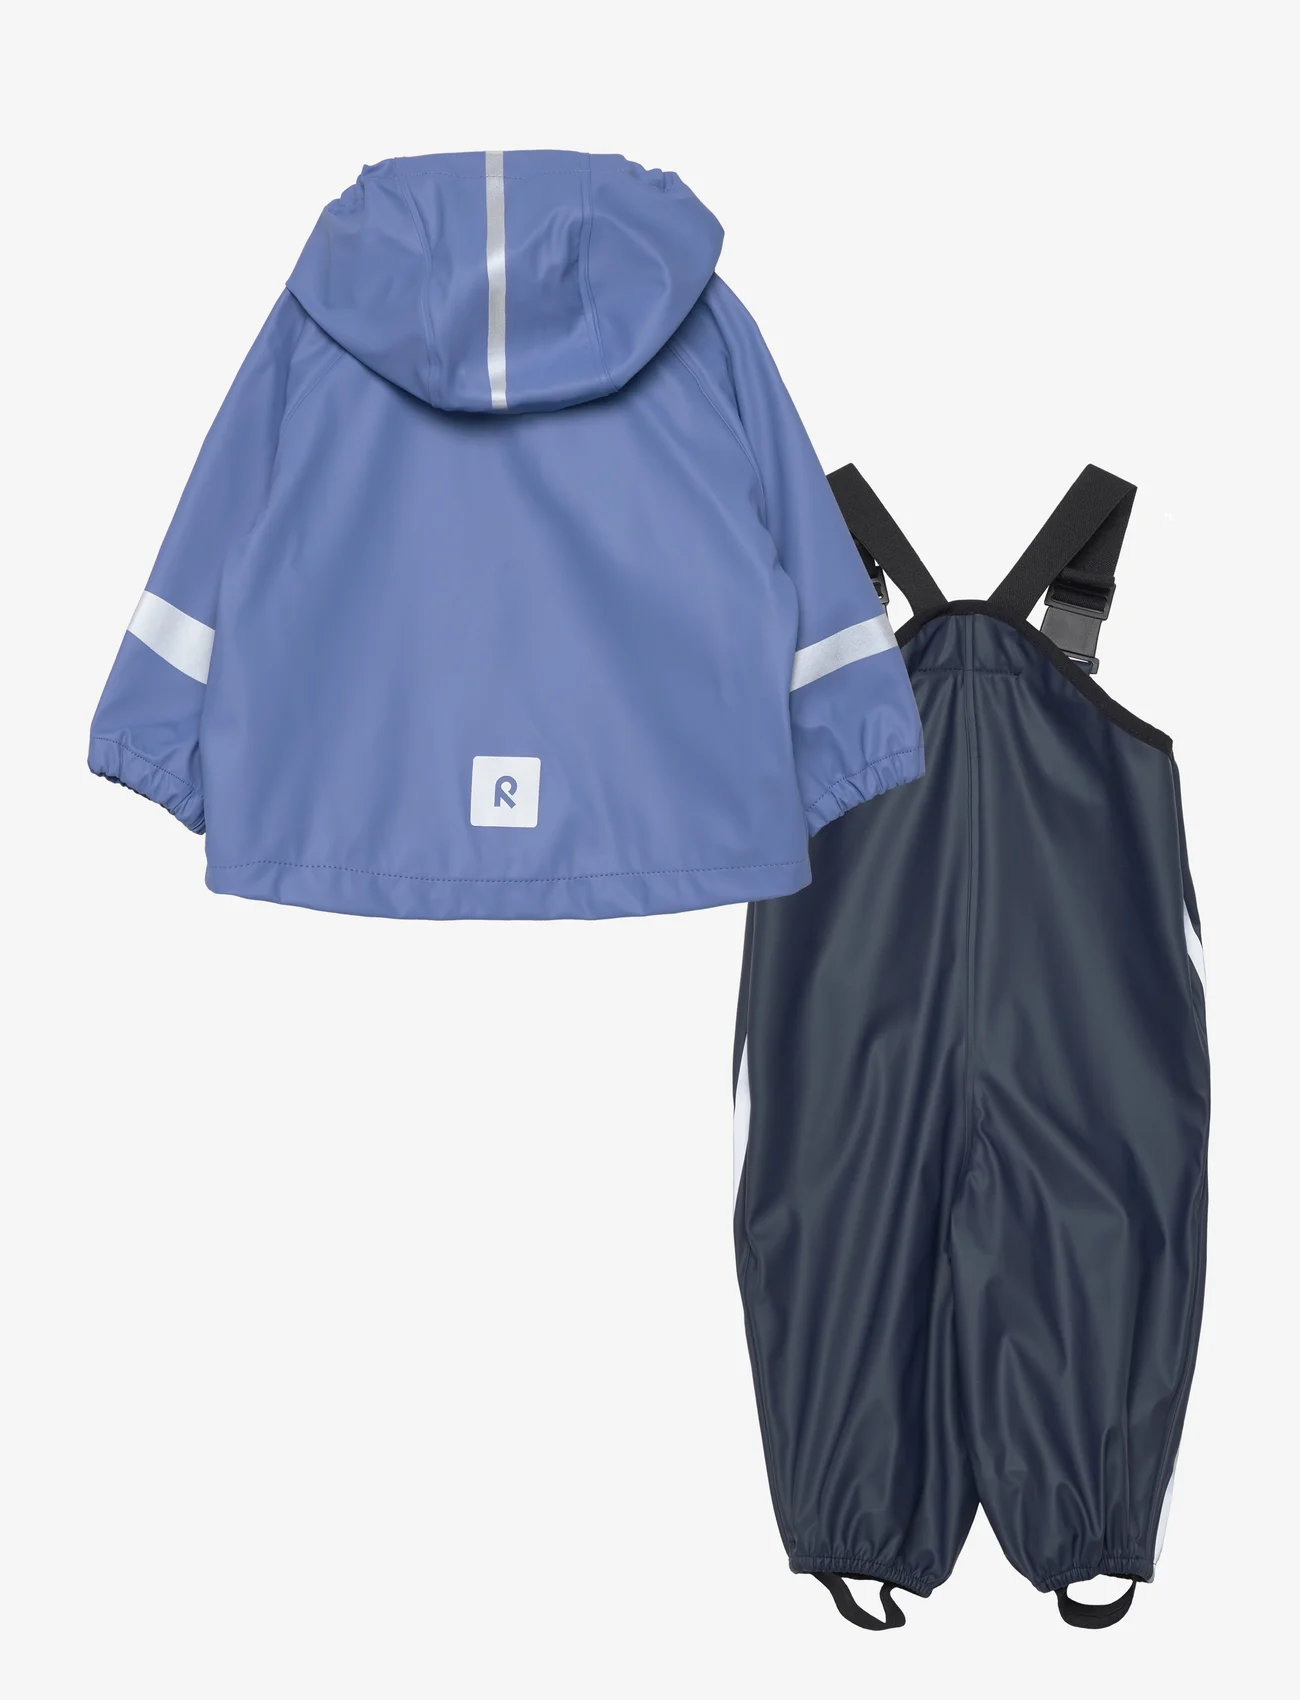 Reima - Rain outfit, Tihku - lauko drabužiai - denim blue - 1